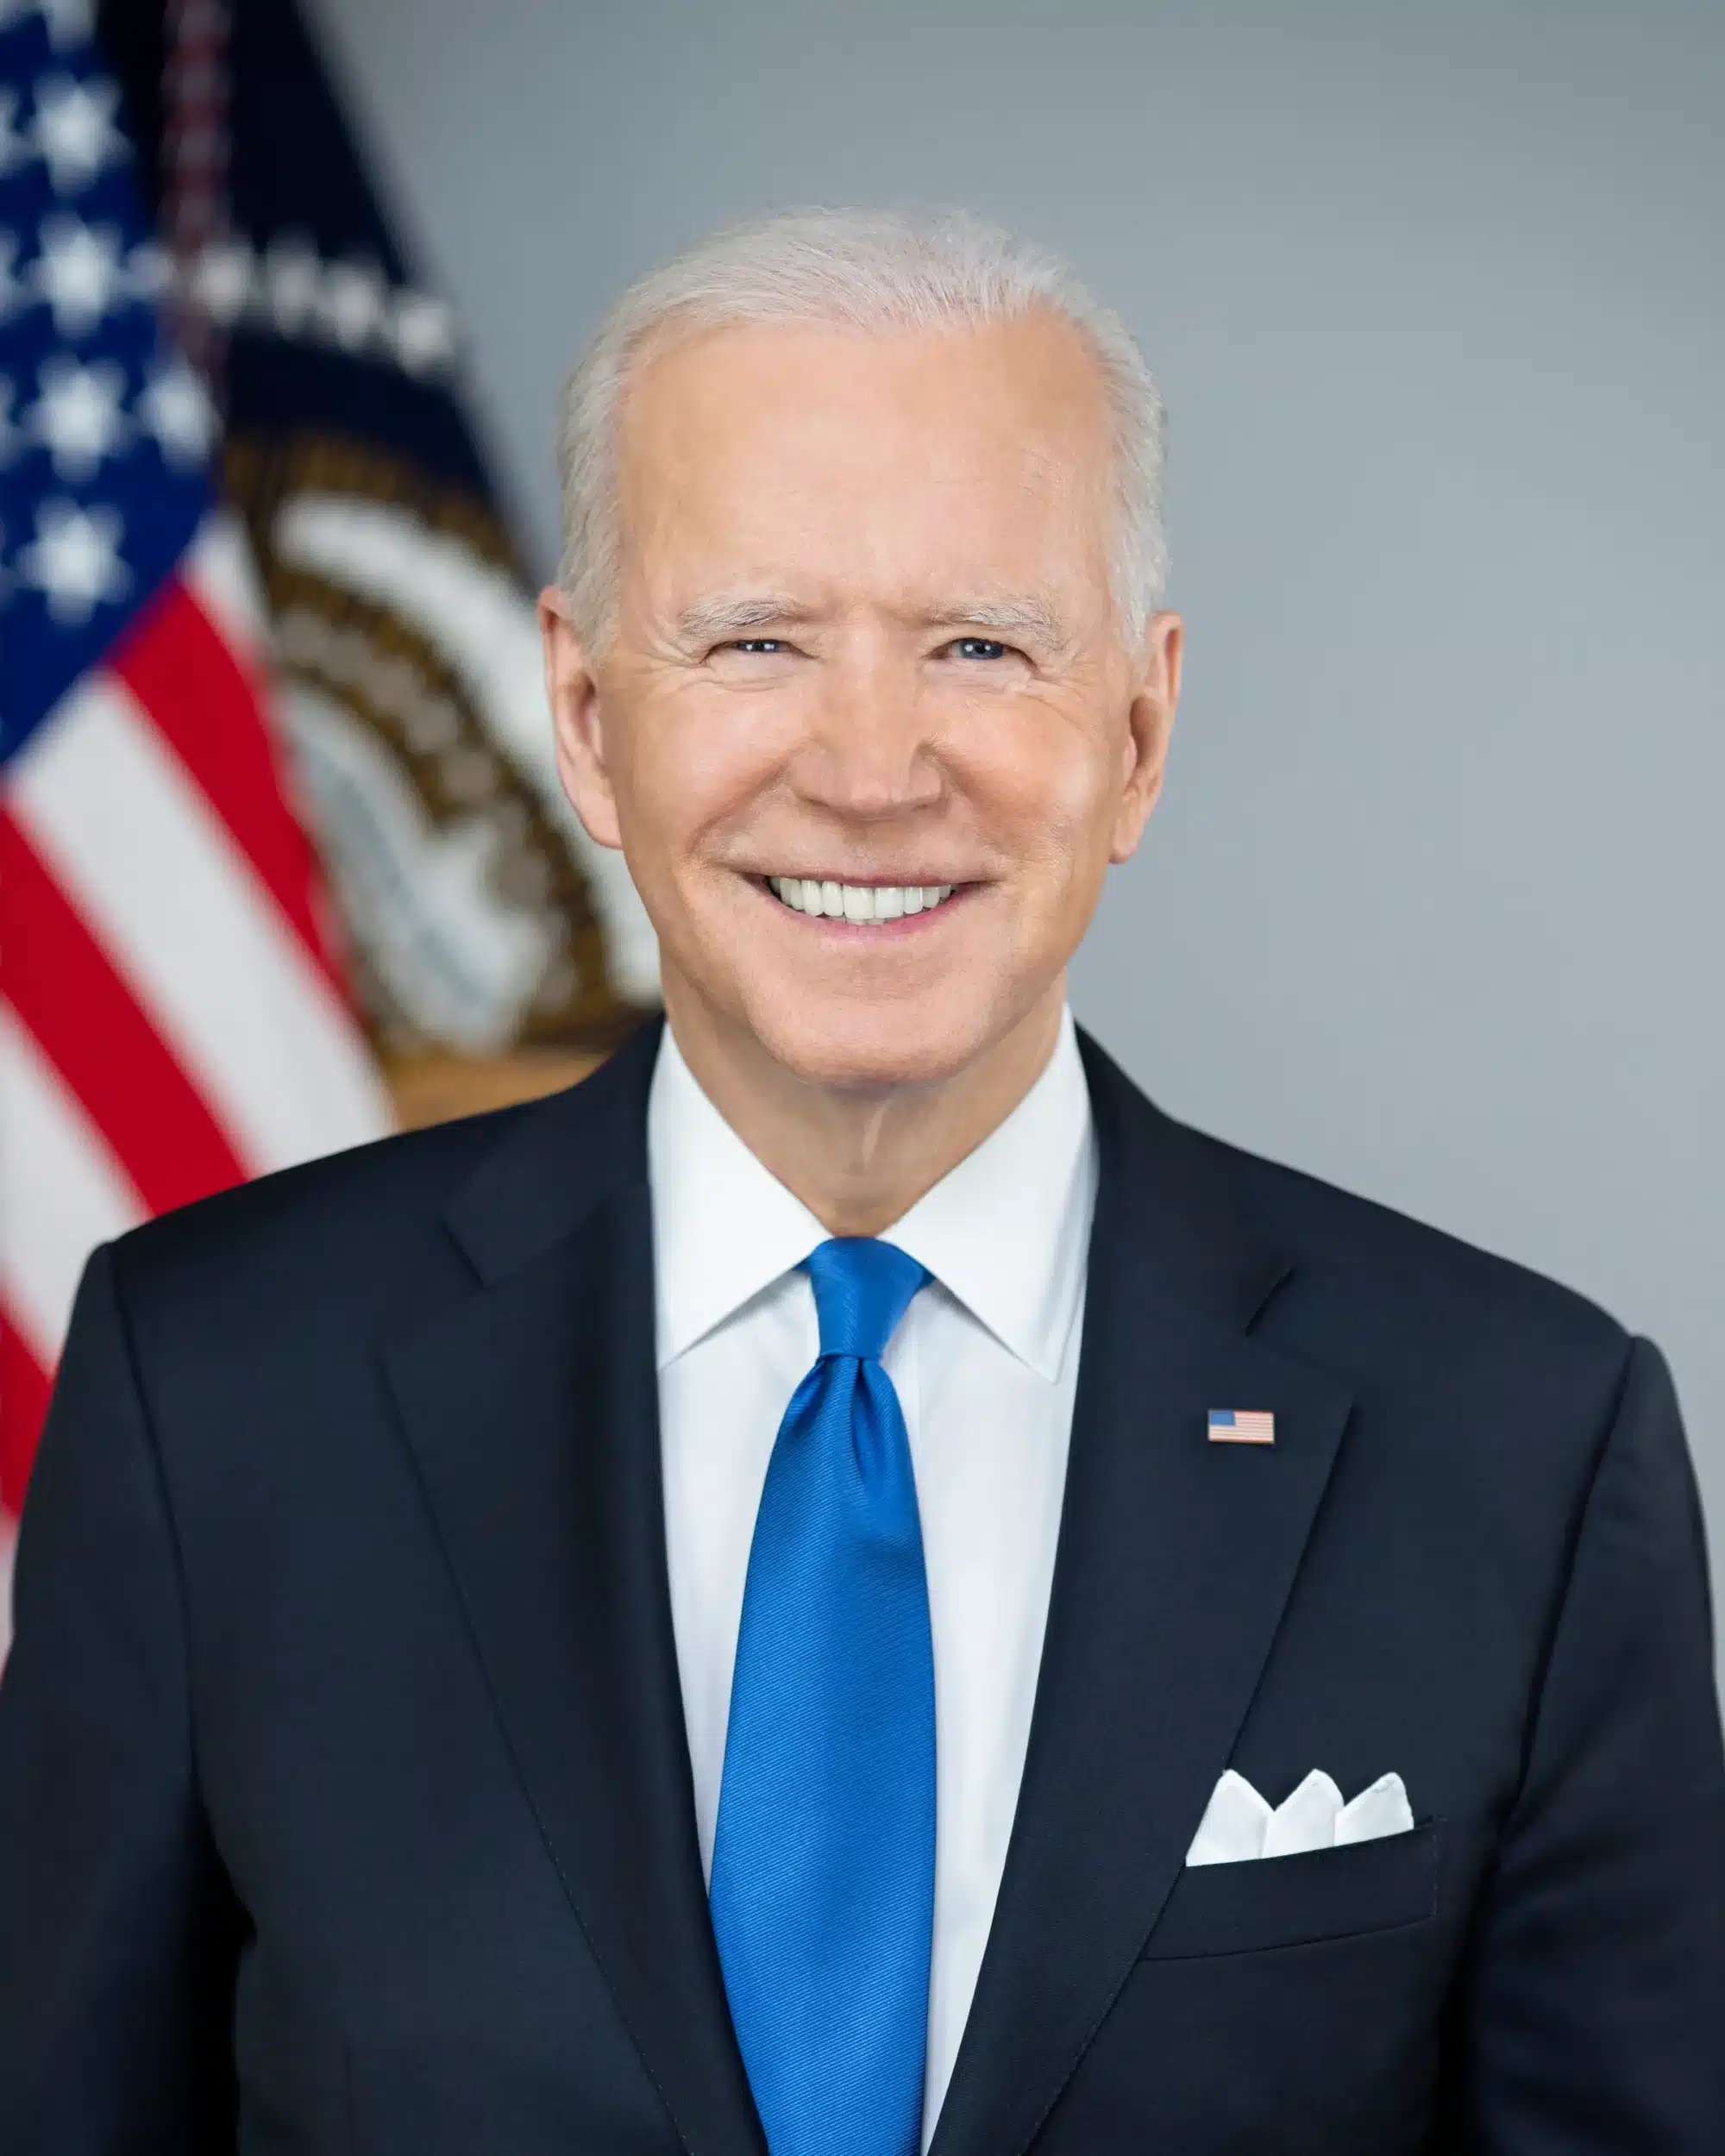 President Joe Biden backs organics recycling